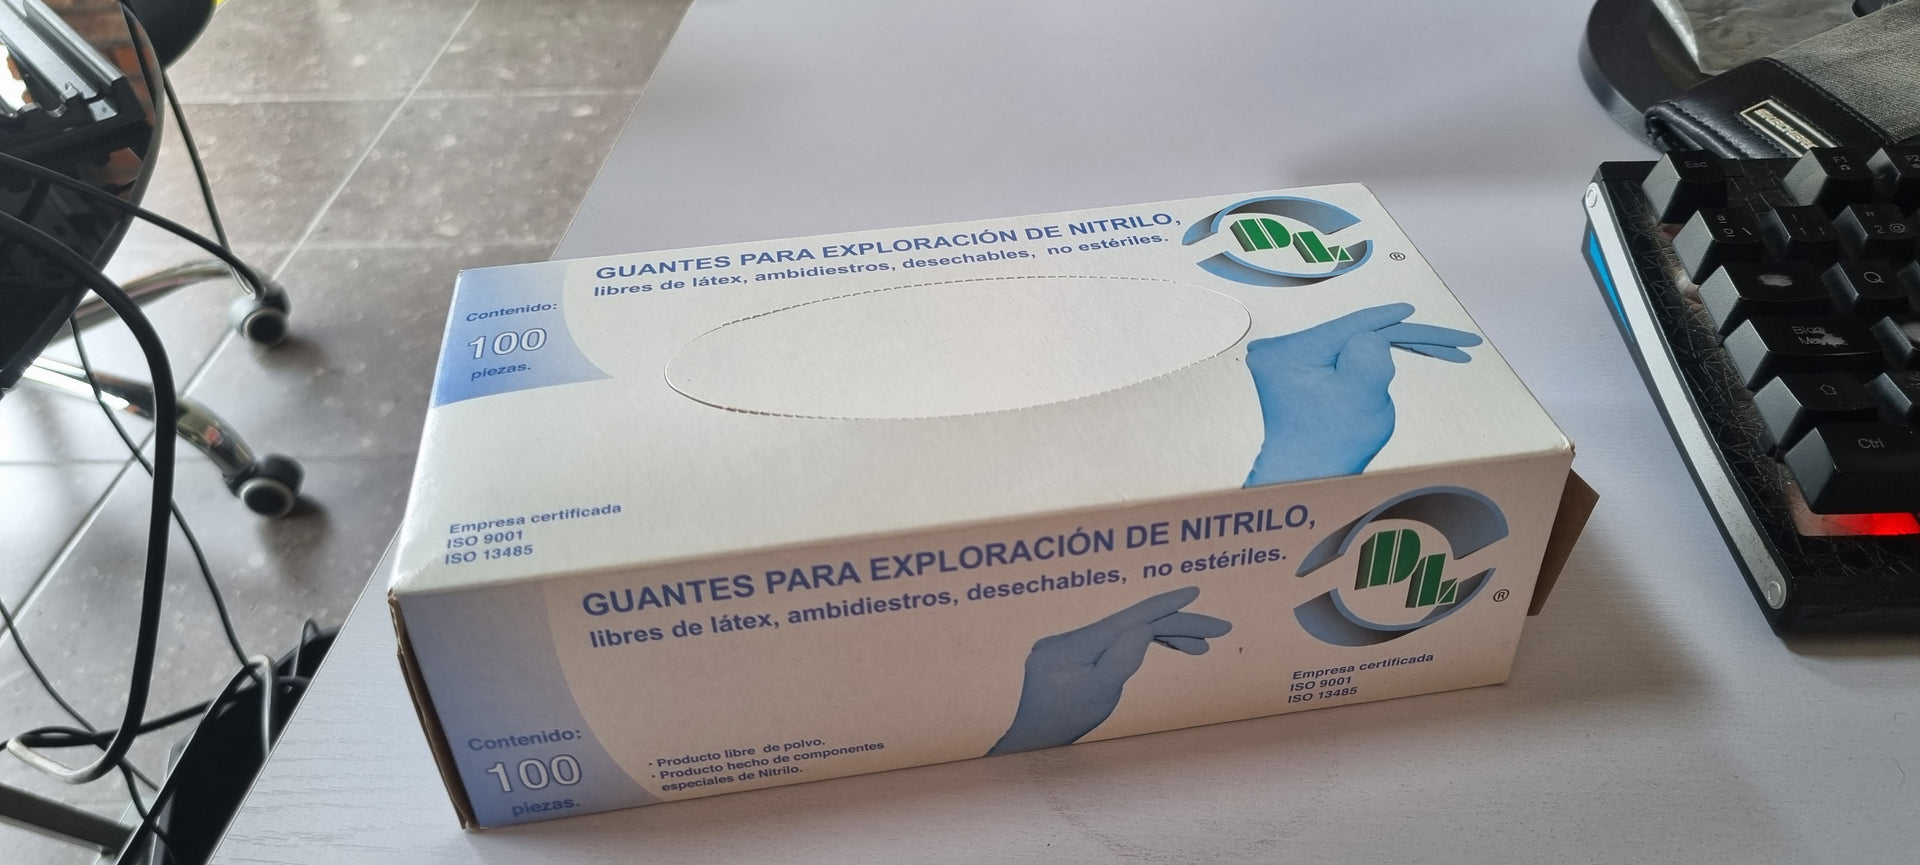 100 GUANTES Nitrilo XL - Dent-thel